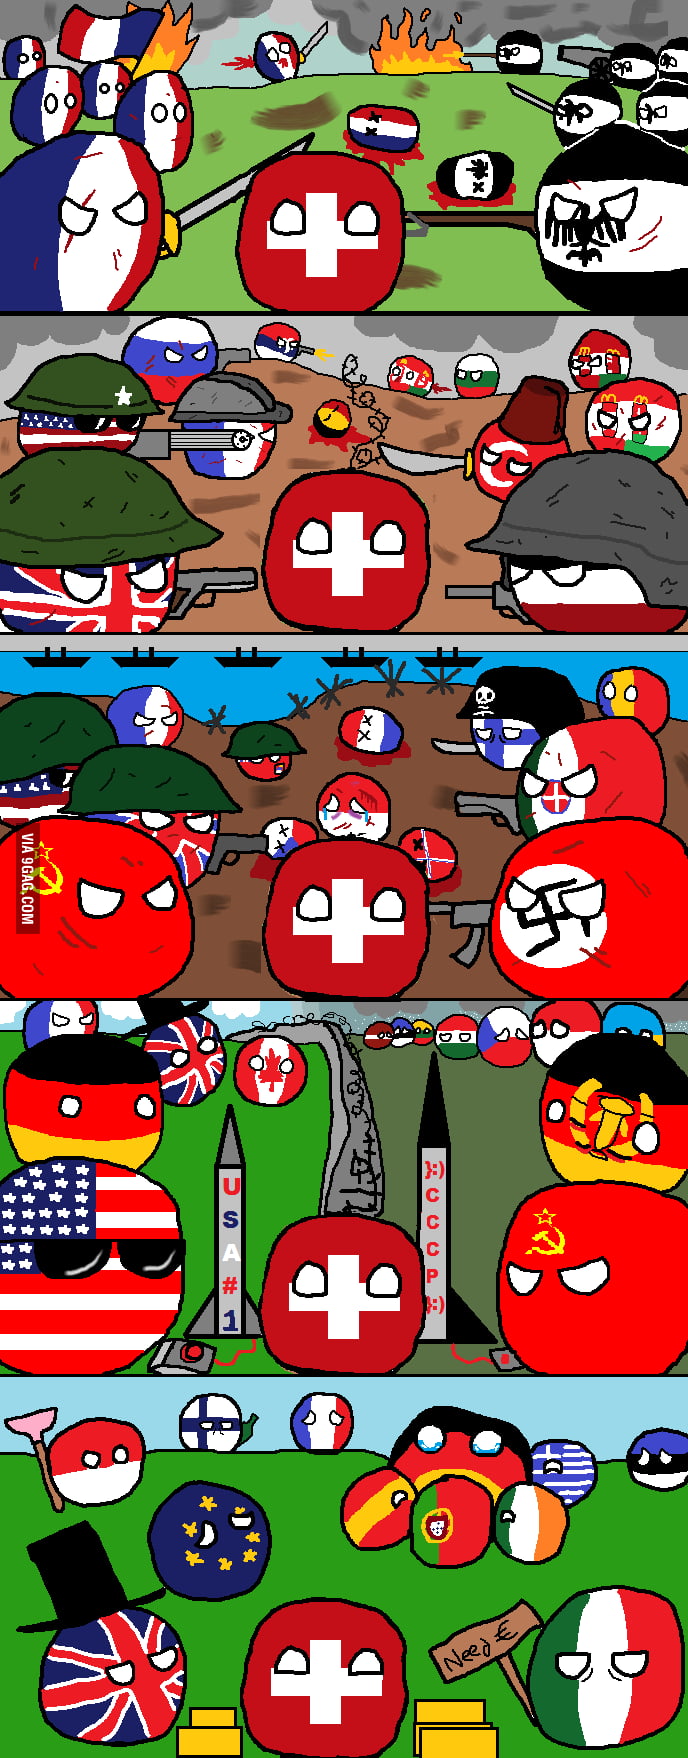 Switzerland throughout history - 9GAG